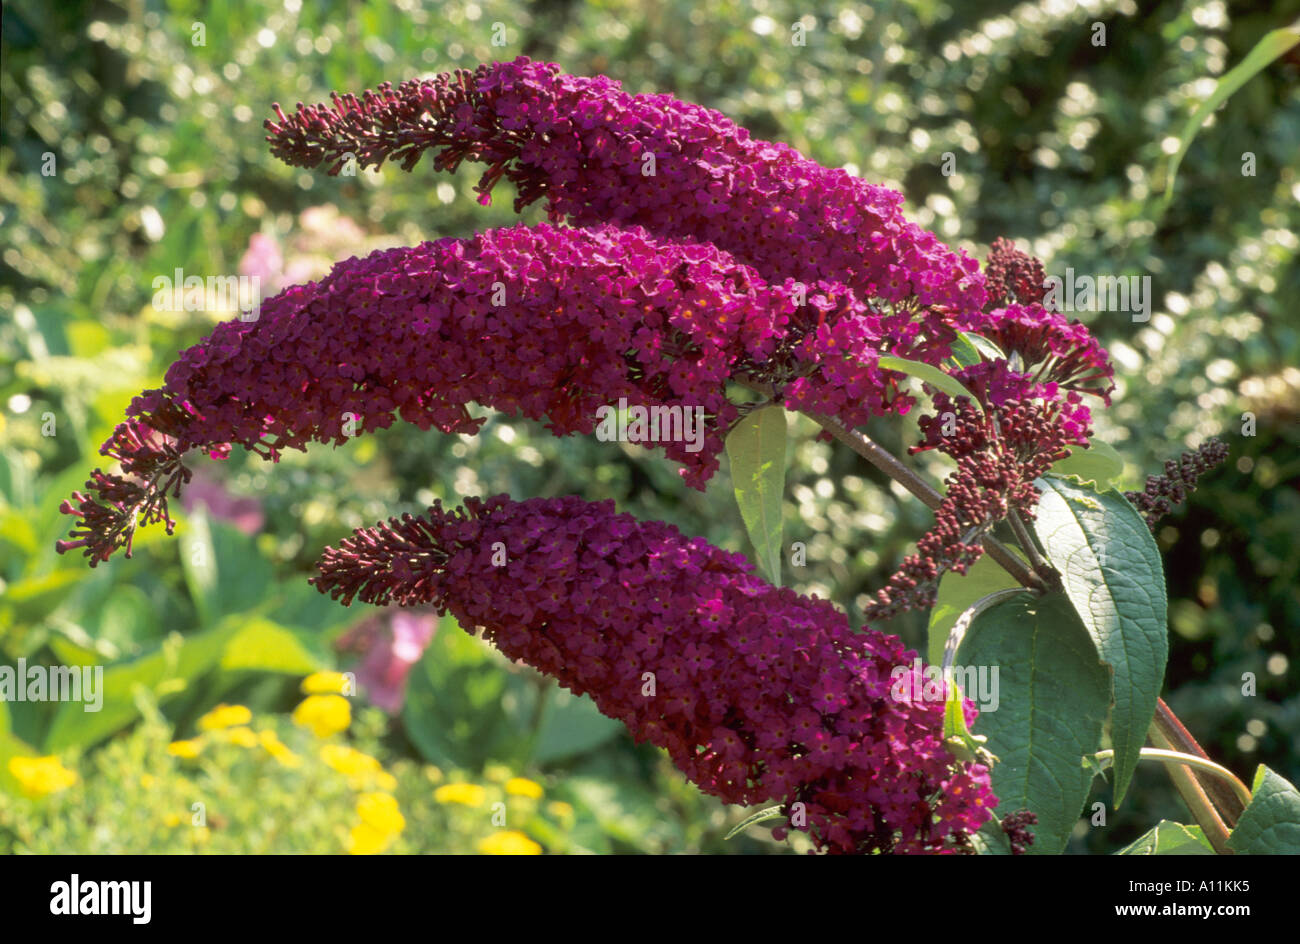 Buddleia 'Royal Red', fragrant tubular dark red, purple flowers, garden plant, Buddleja buddlejas buddleias Stock Photo